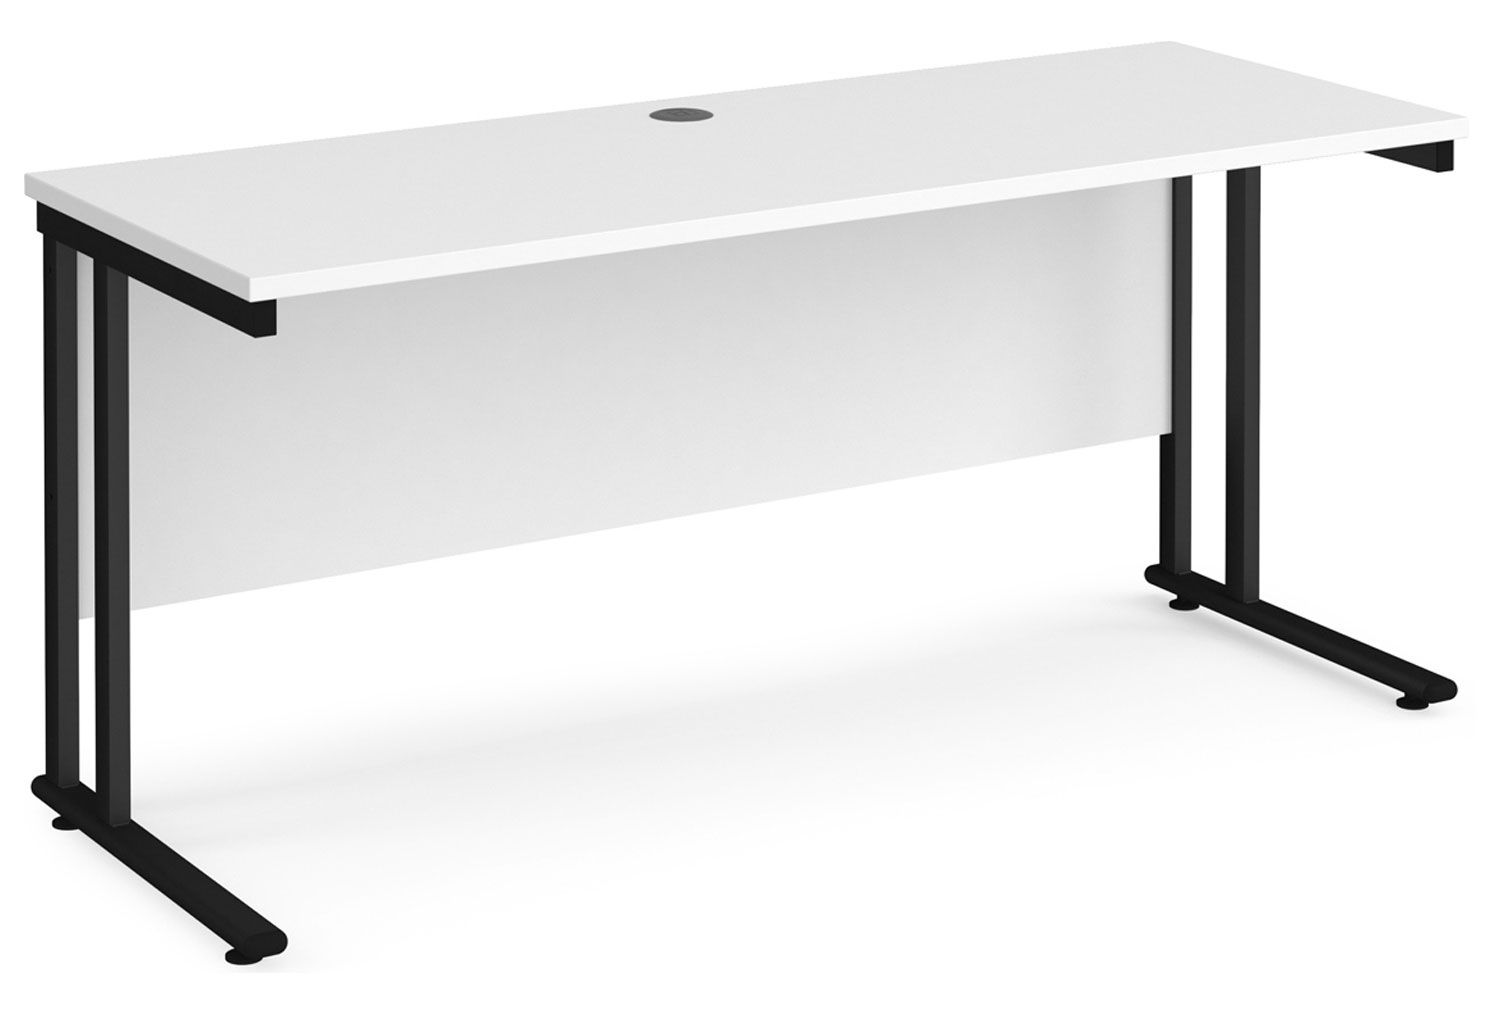 Value Line Deluxe C-Leg Narrow Rectangular Office Desk (Black Legs), 160w60dx73h (cm), White, Express Delivery